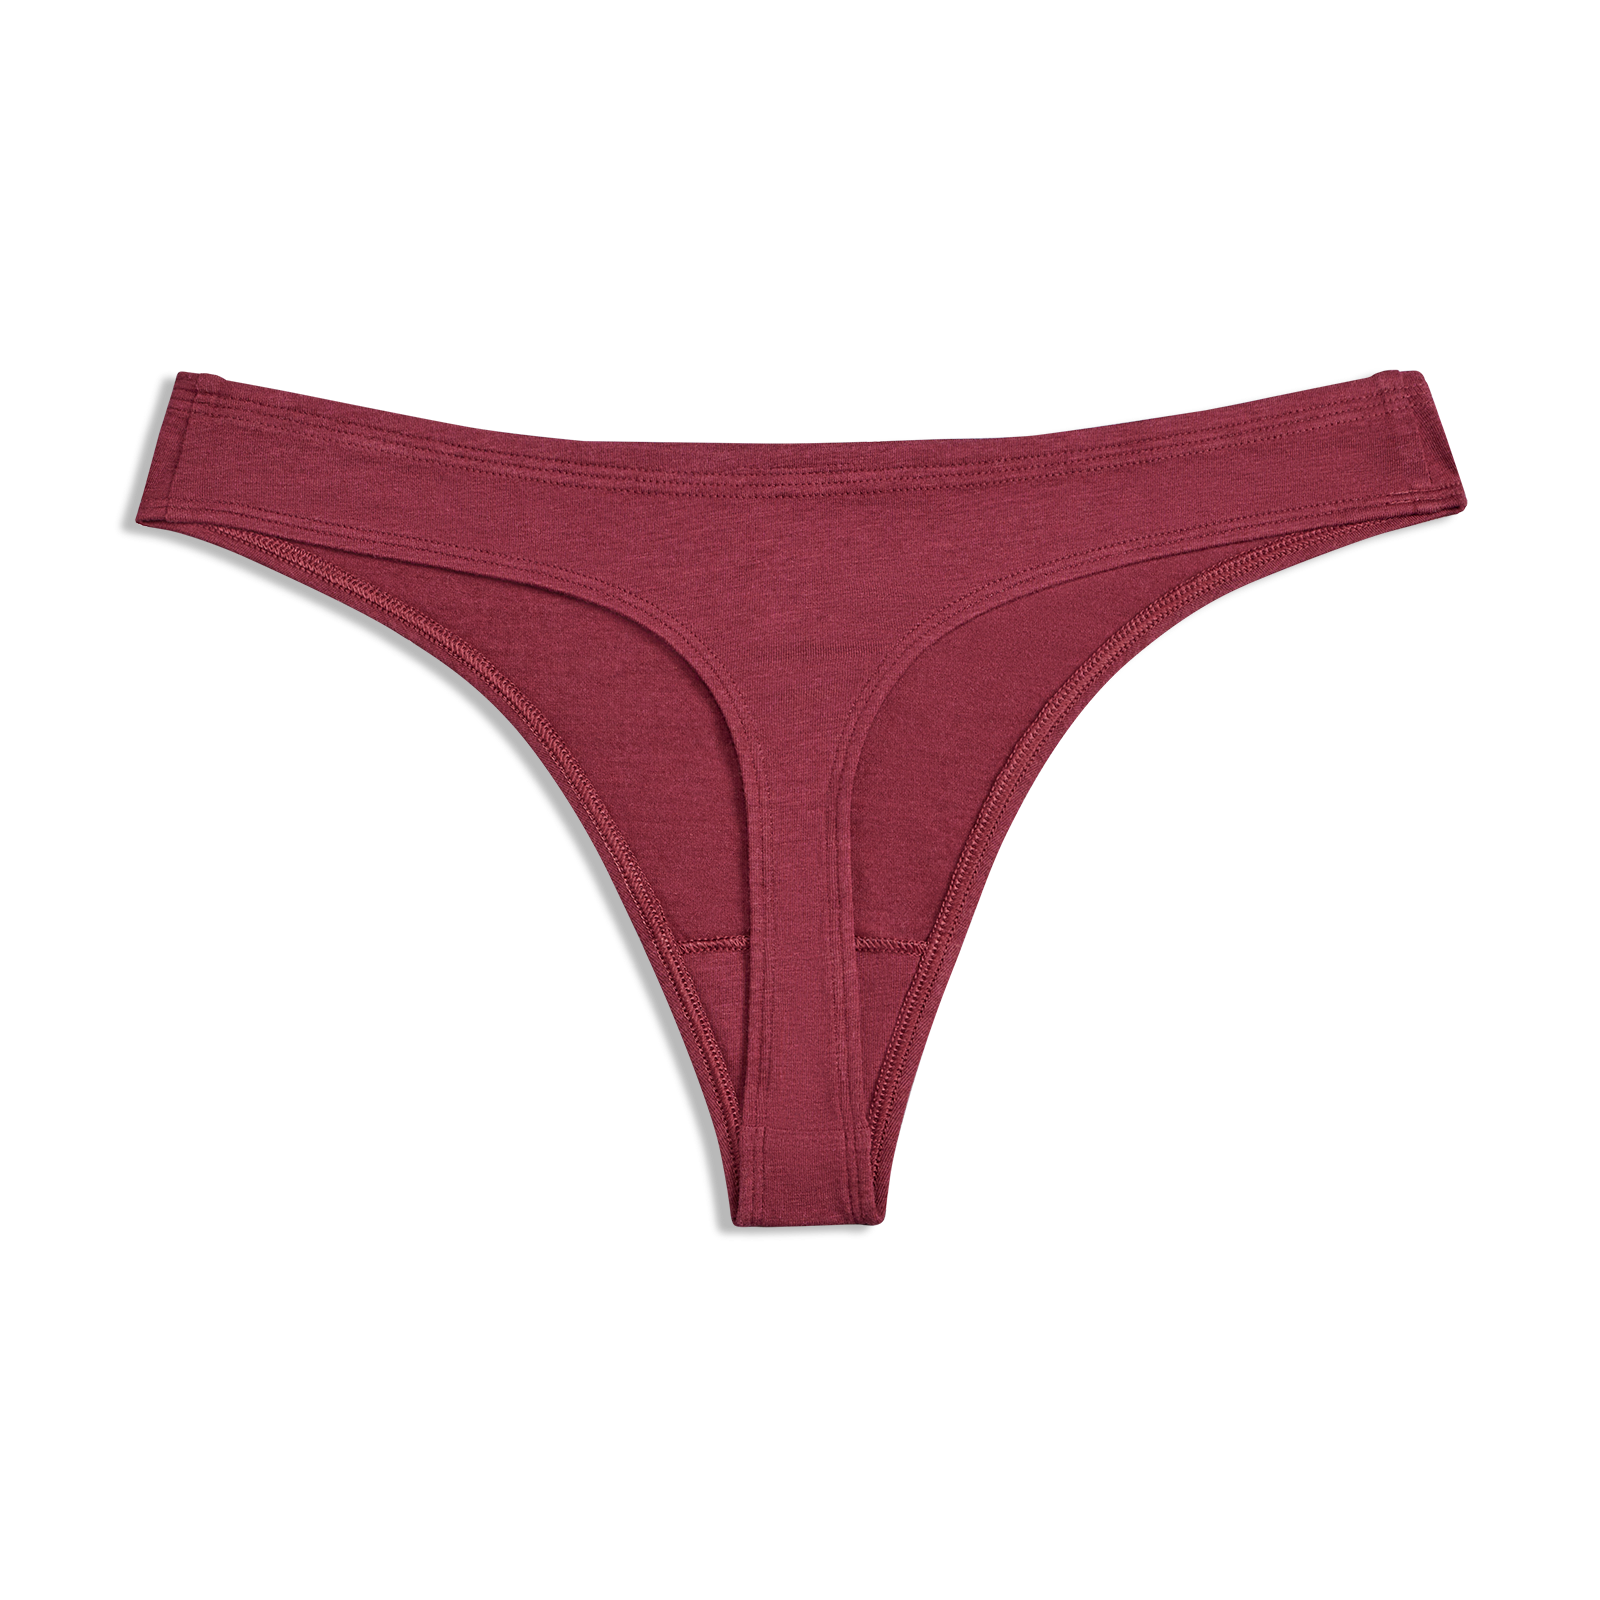 Women's Burgundy Thong Panties